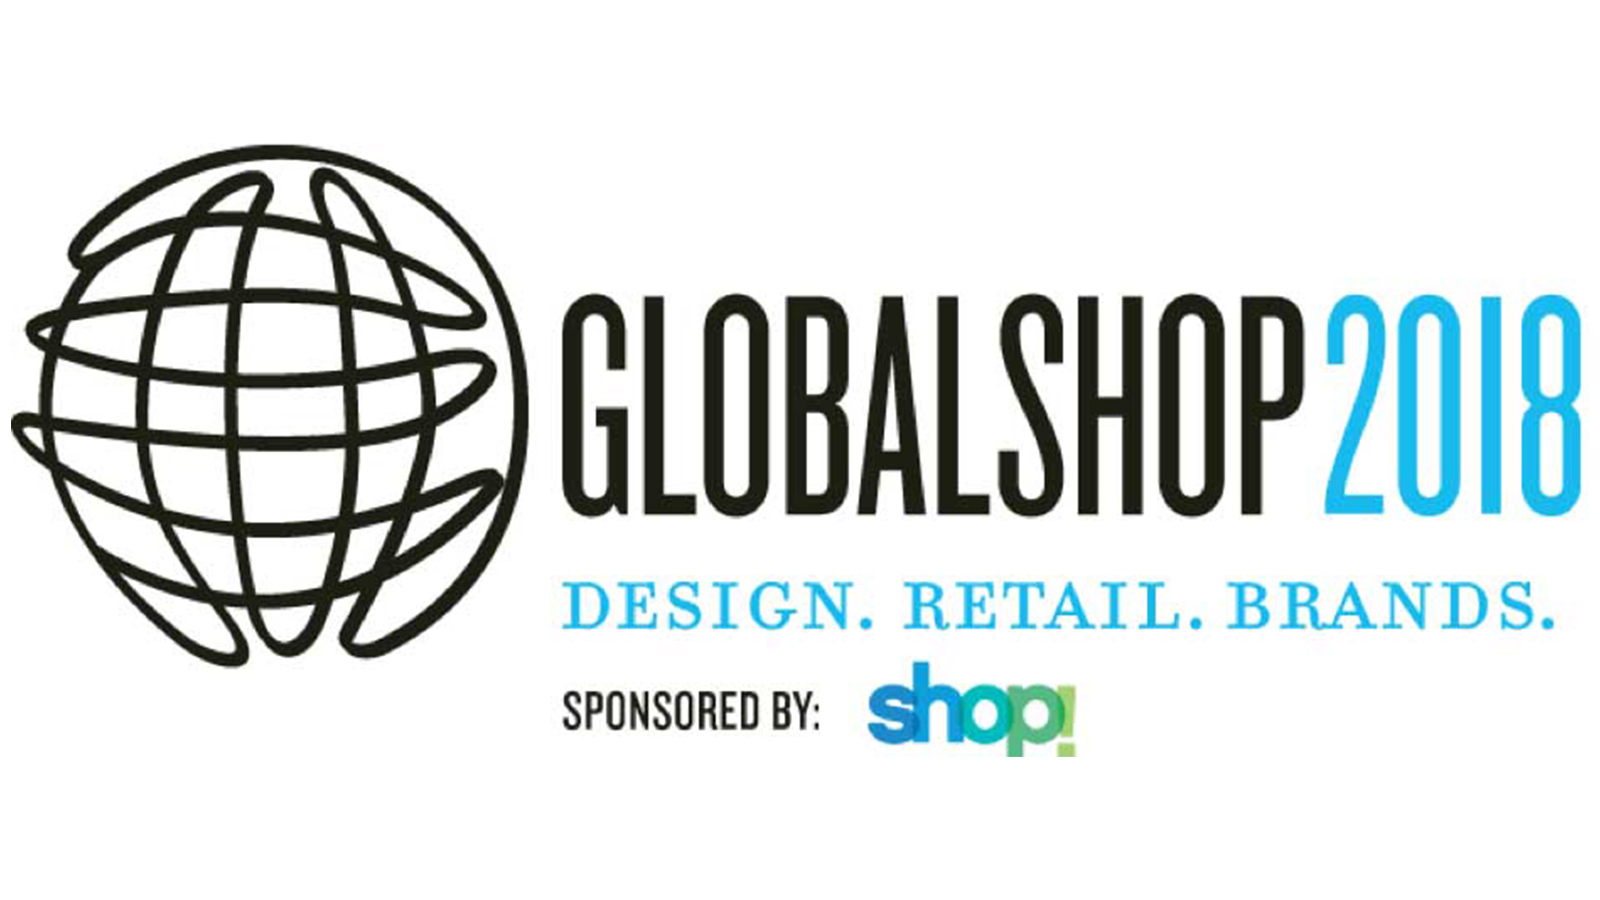 Global Shop Tradeshow